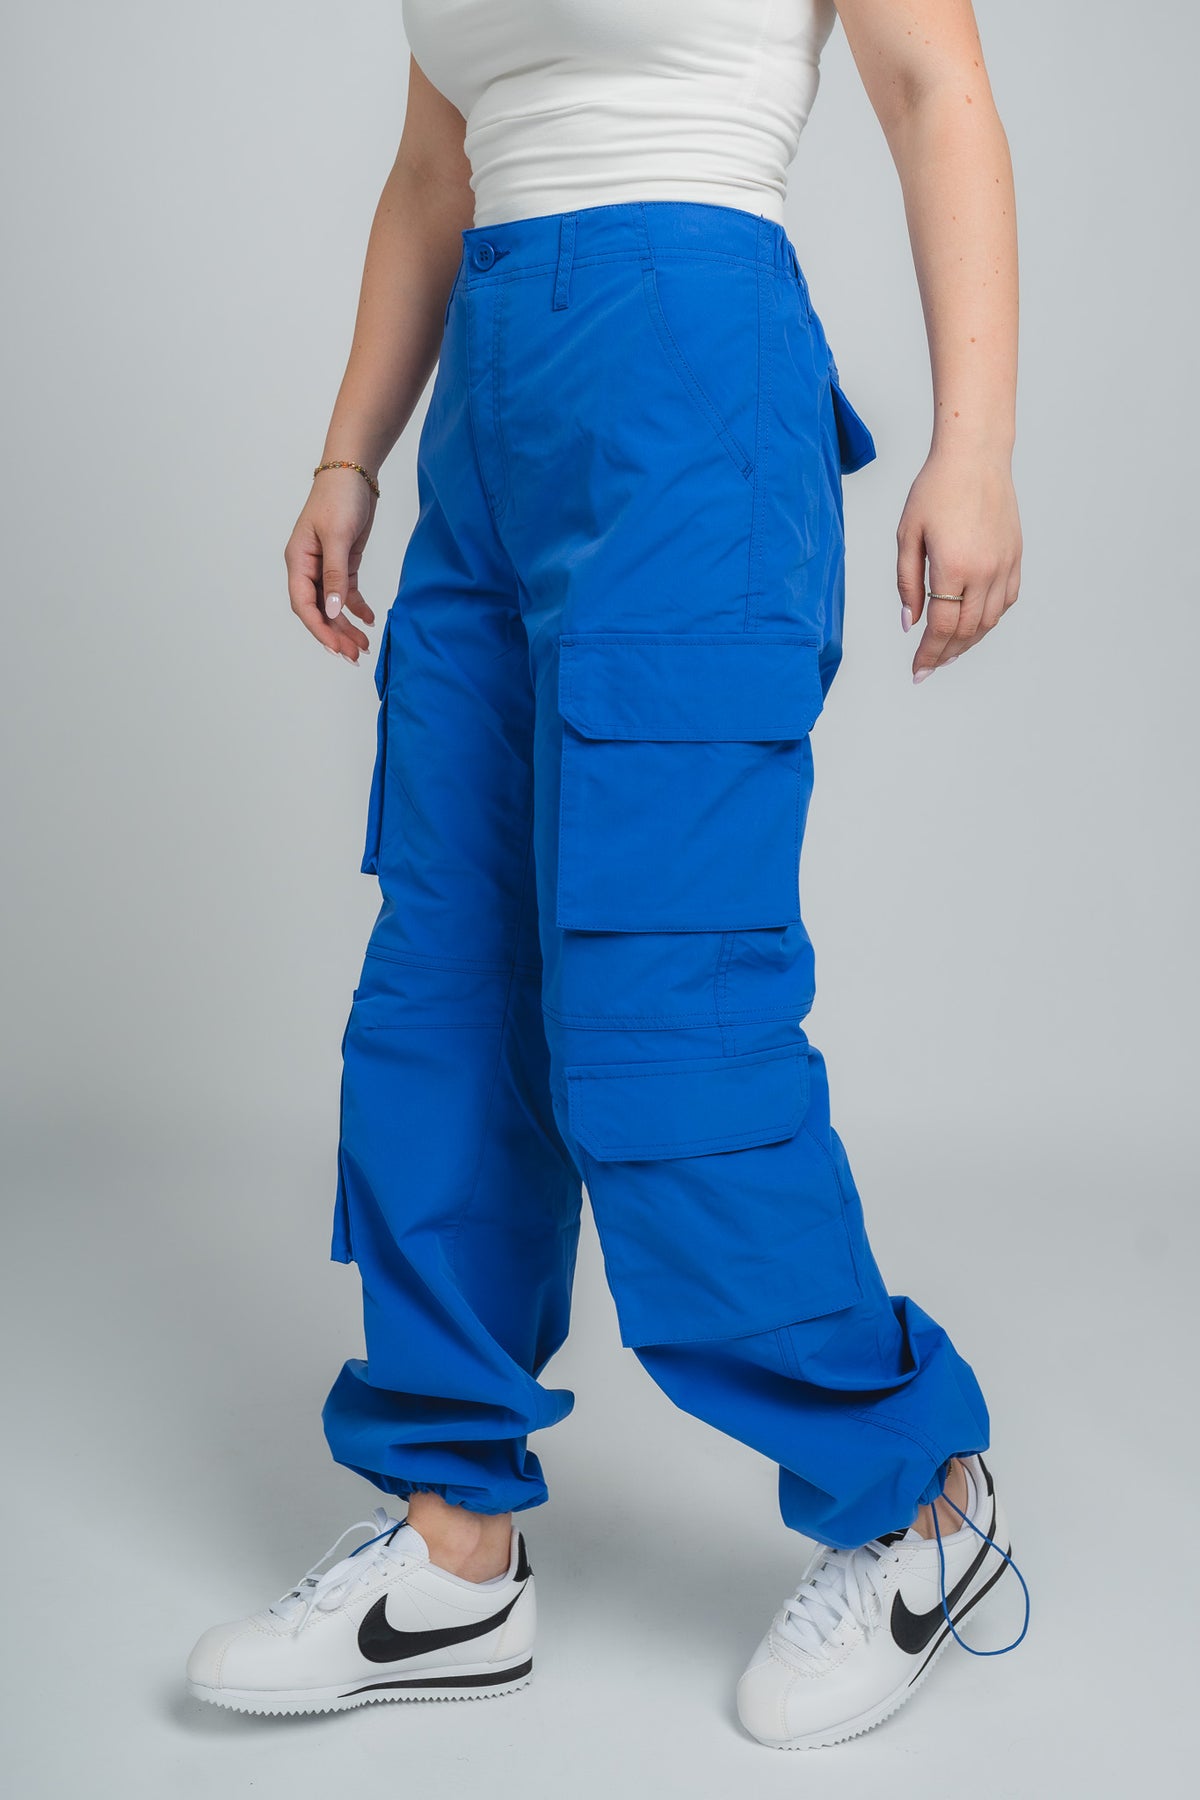 Cargo pants azure - Trendy OKC Apparel at Lush Fashion Lounge Boutique in Oklahoma City